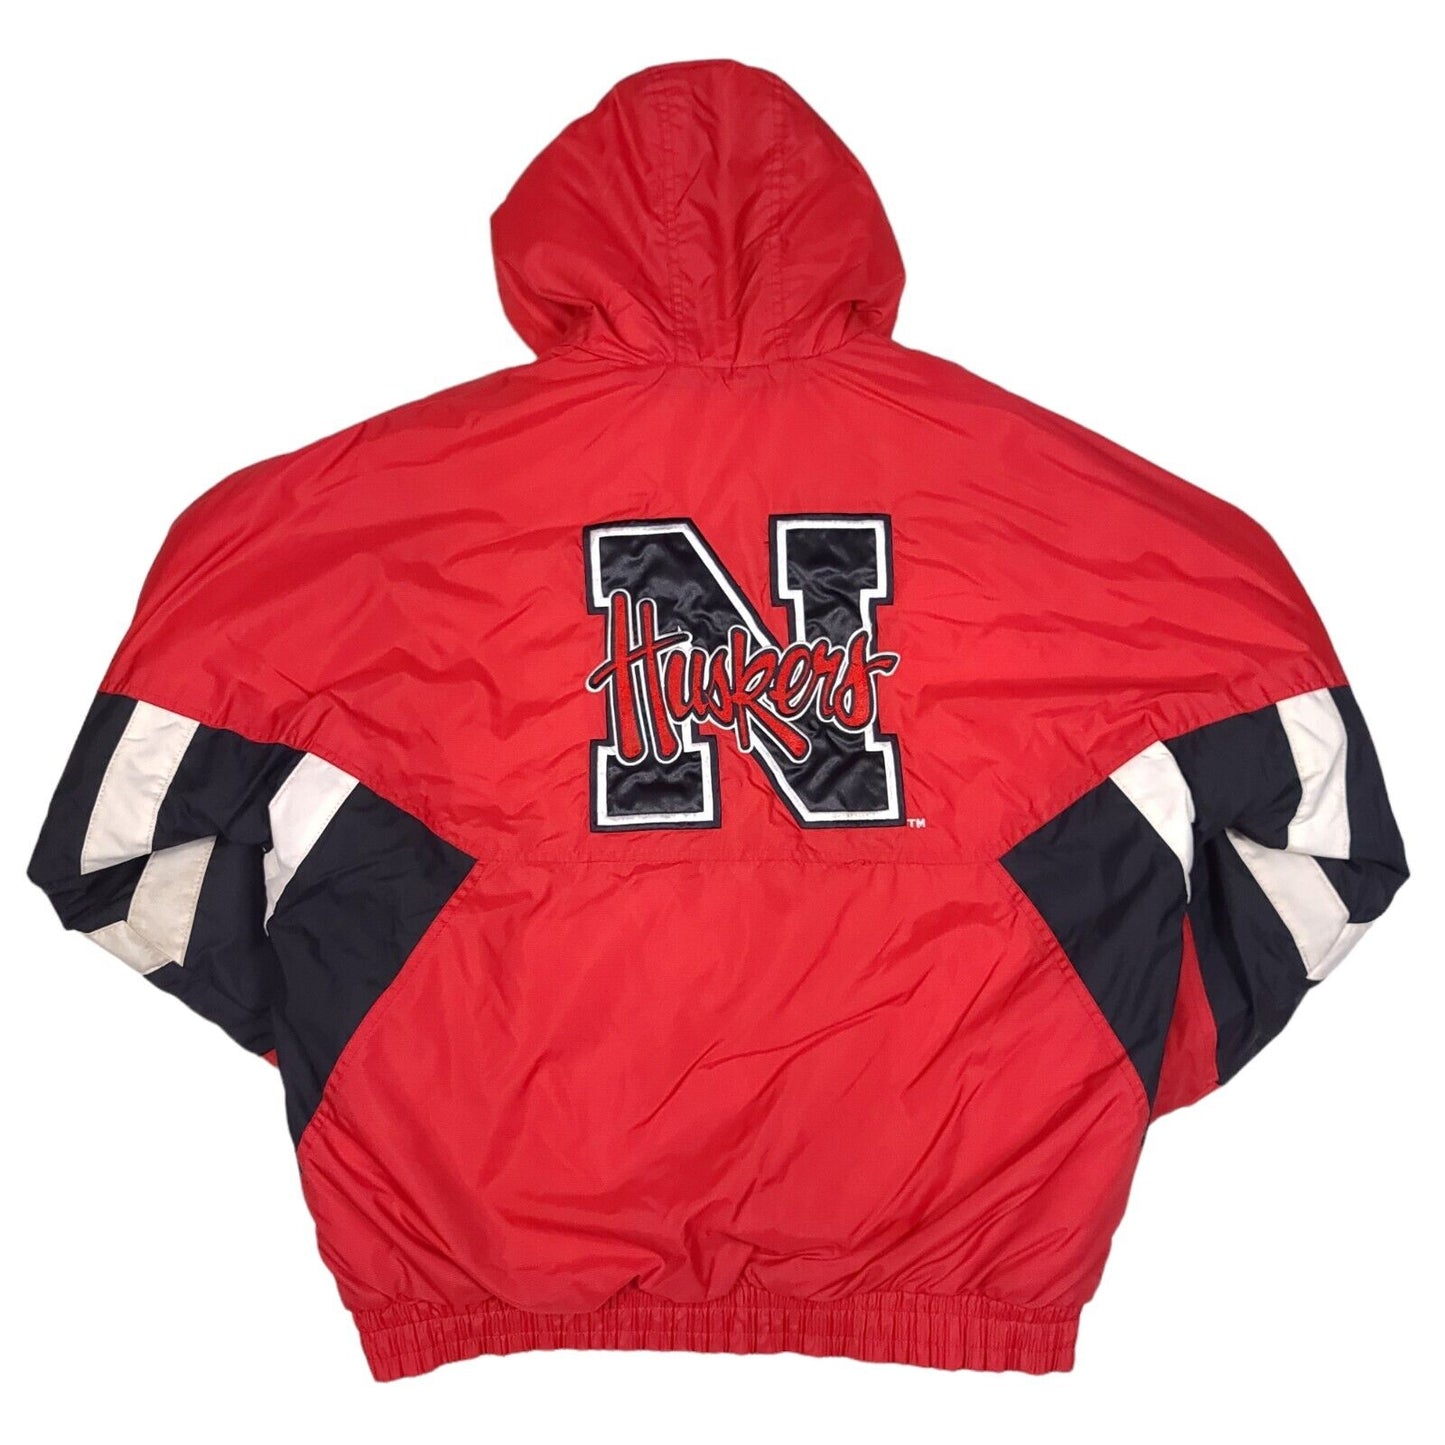 Nebraska Corn Huskers Red Starter Winter Full Zip Jacket Coat